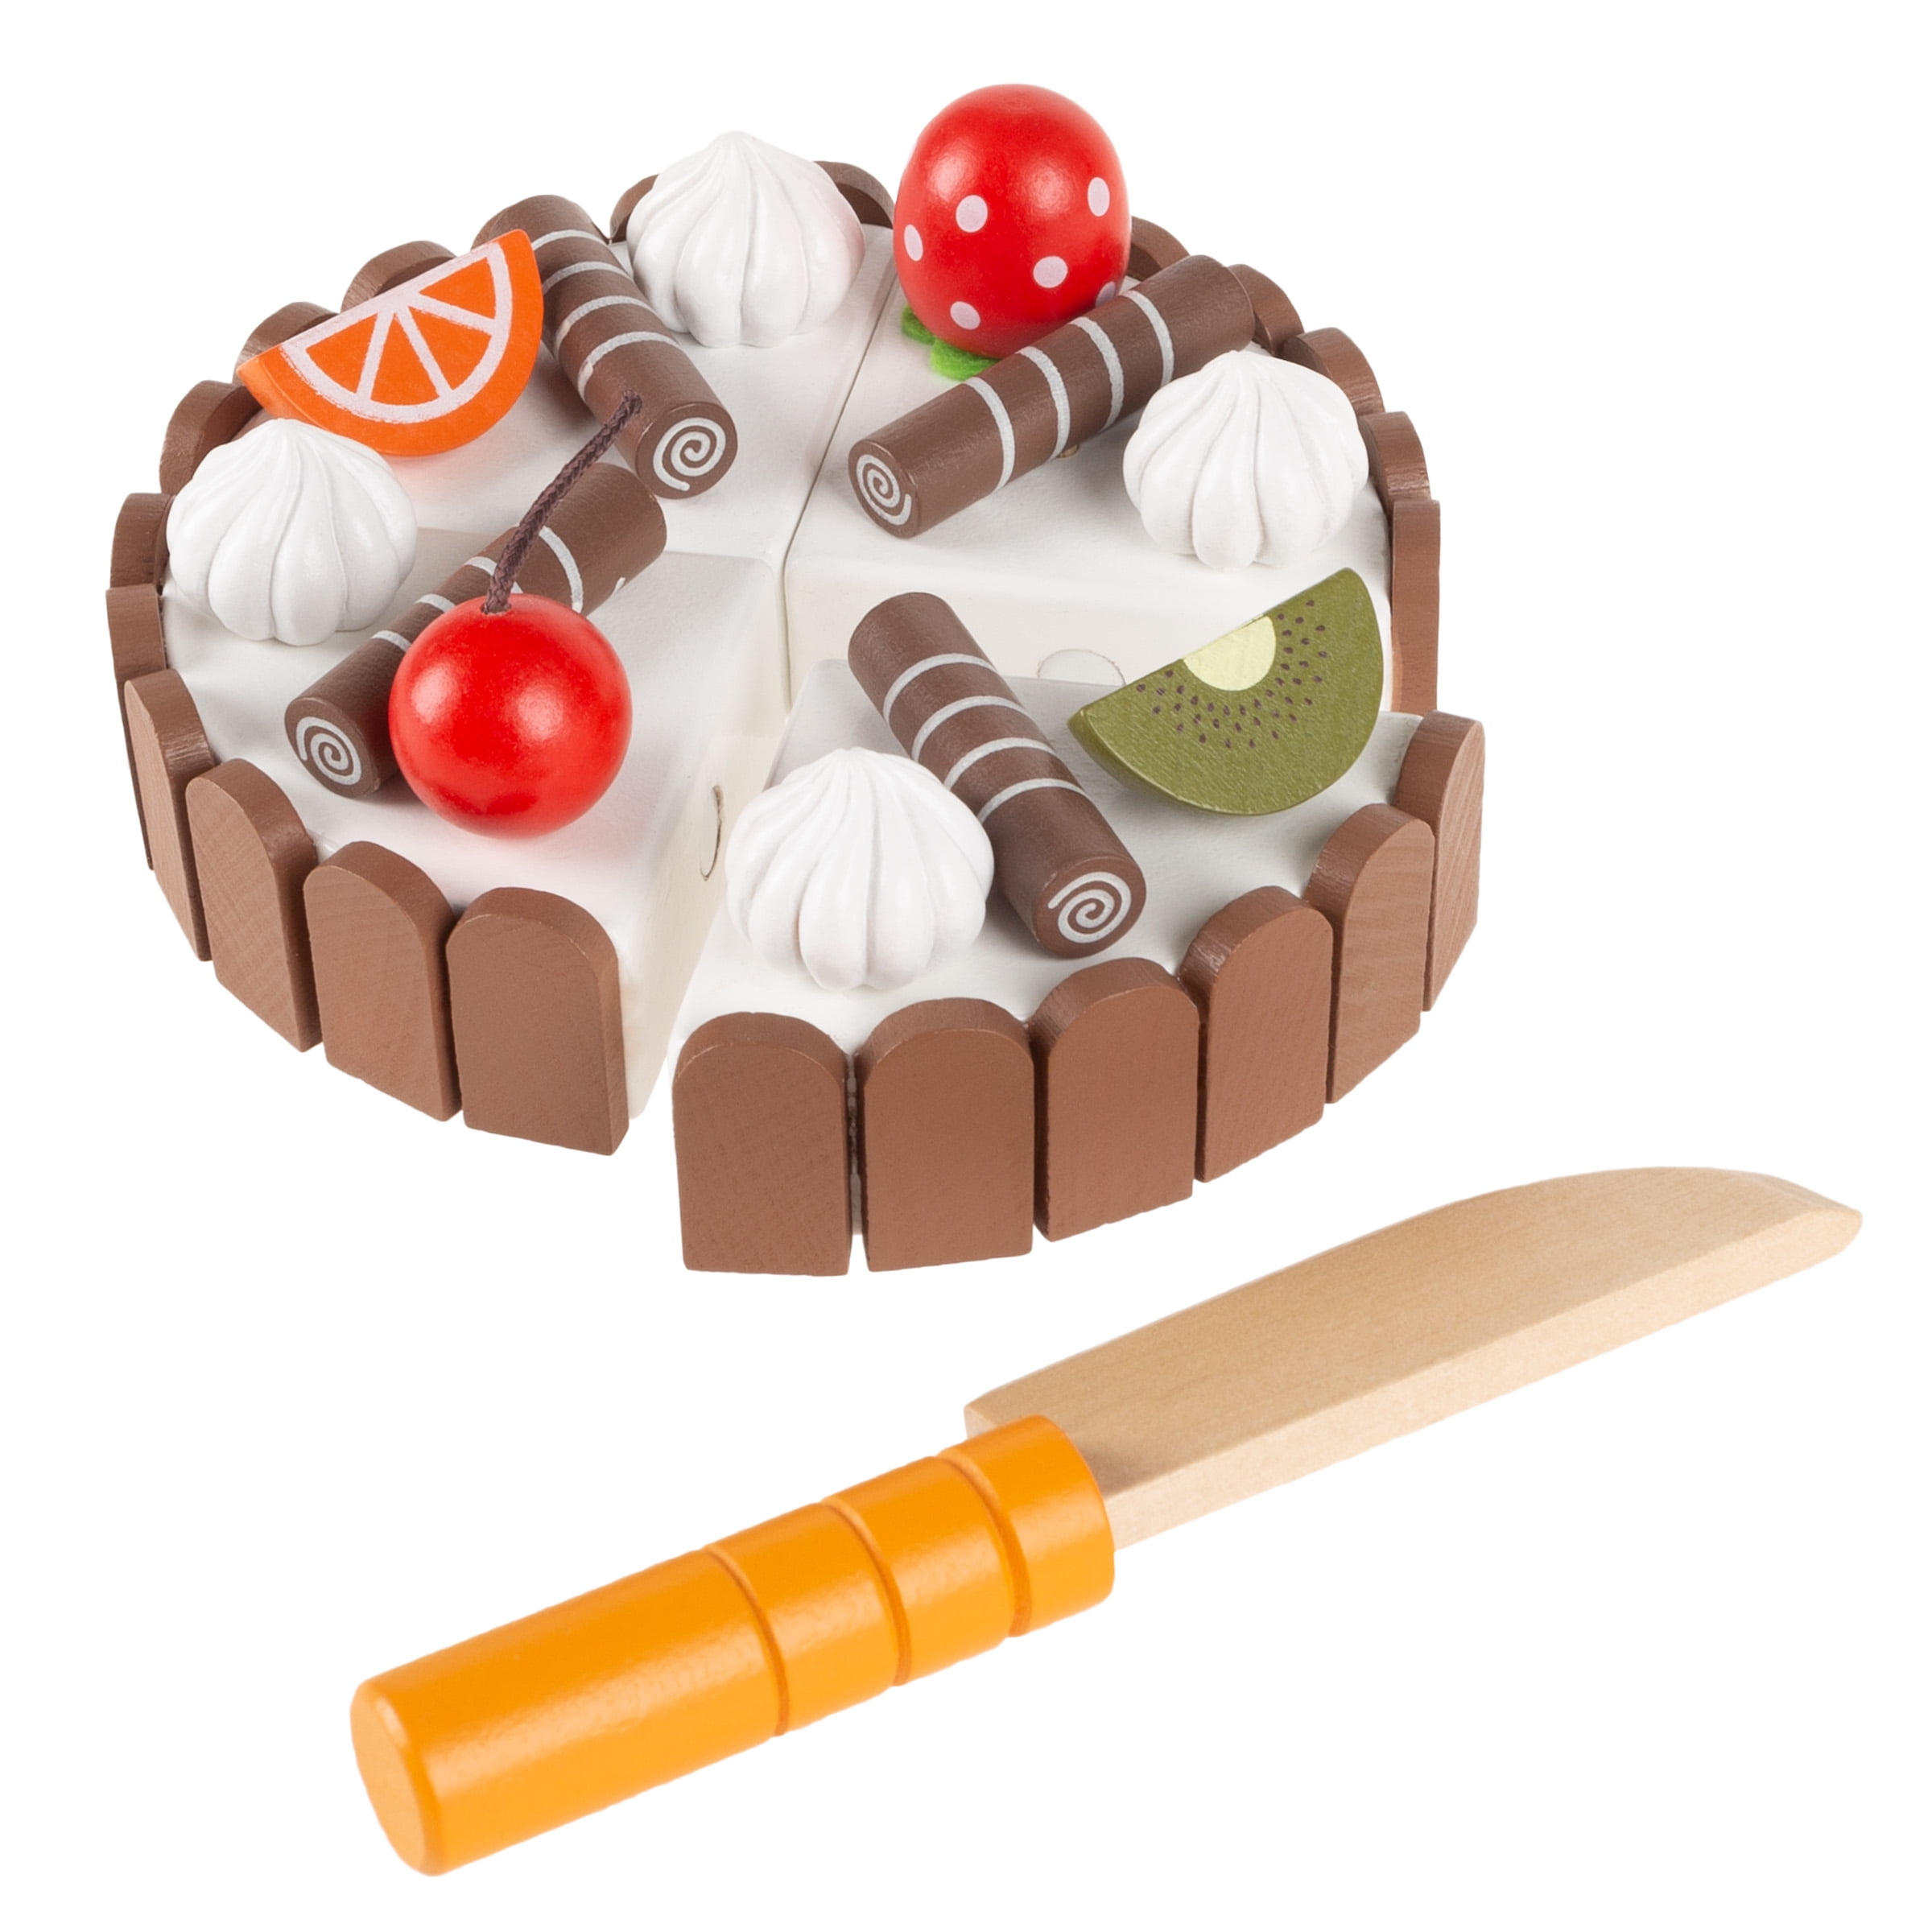 Magnetic Pretend Play Food Dessert Kitchen Toy Cake Cutting Development Game 